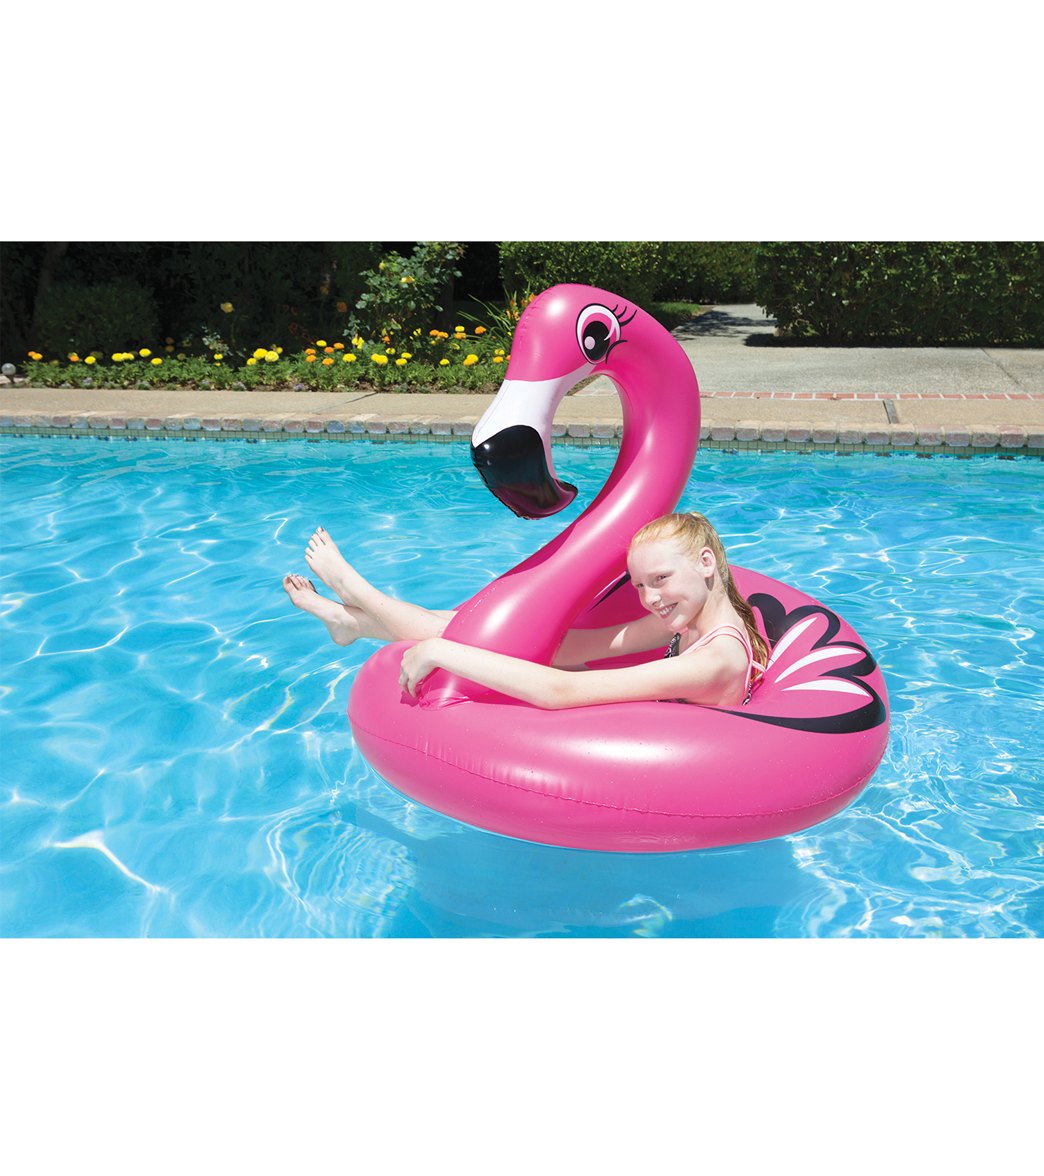 Poolmaster Flamingo Tube at SwimOutlet.com